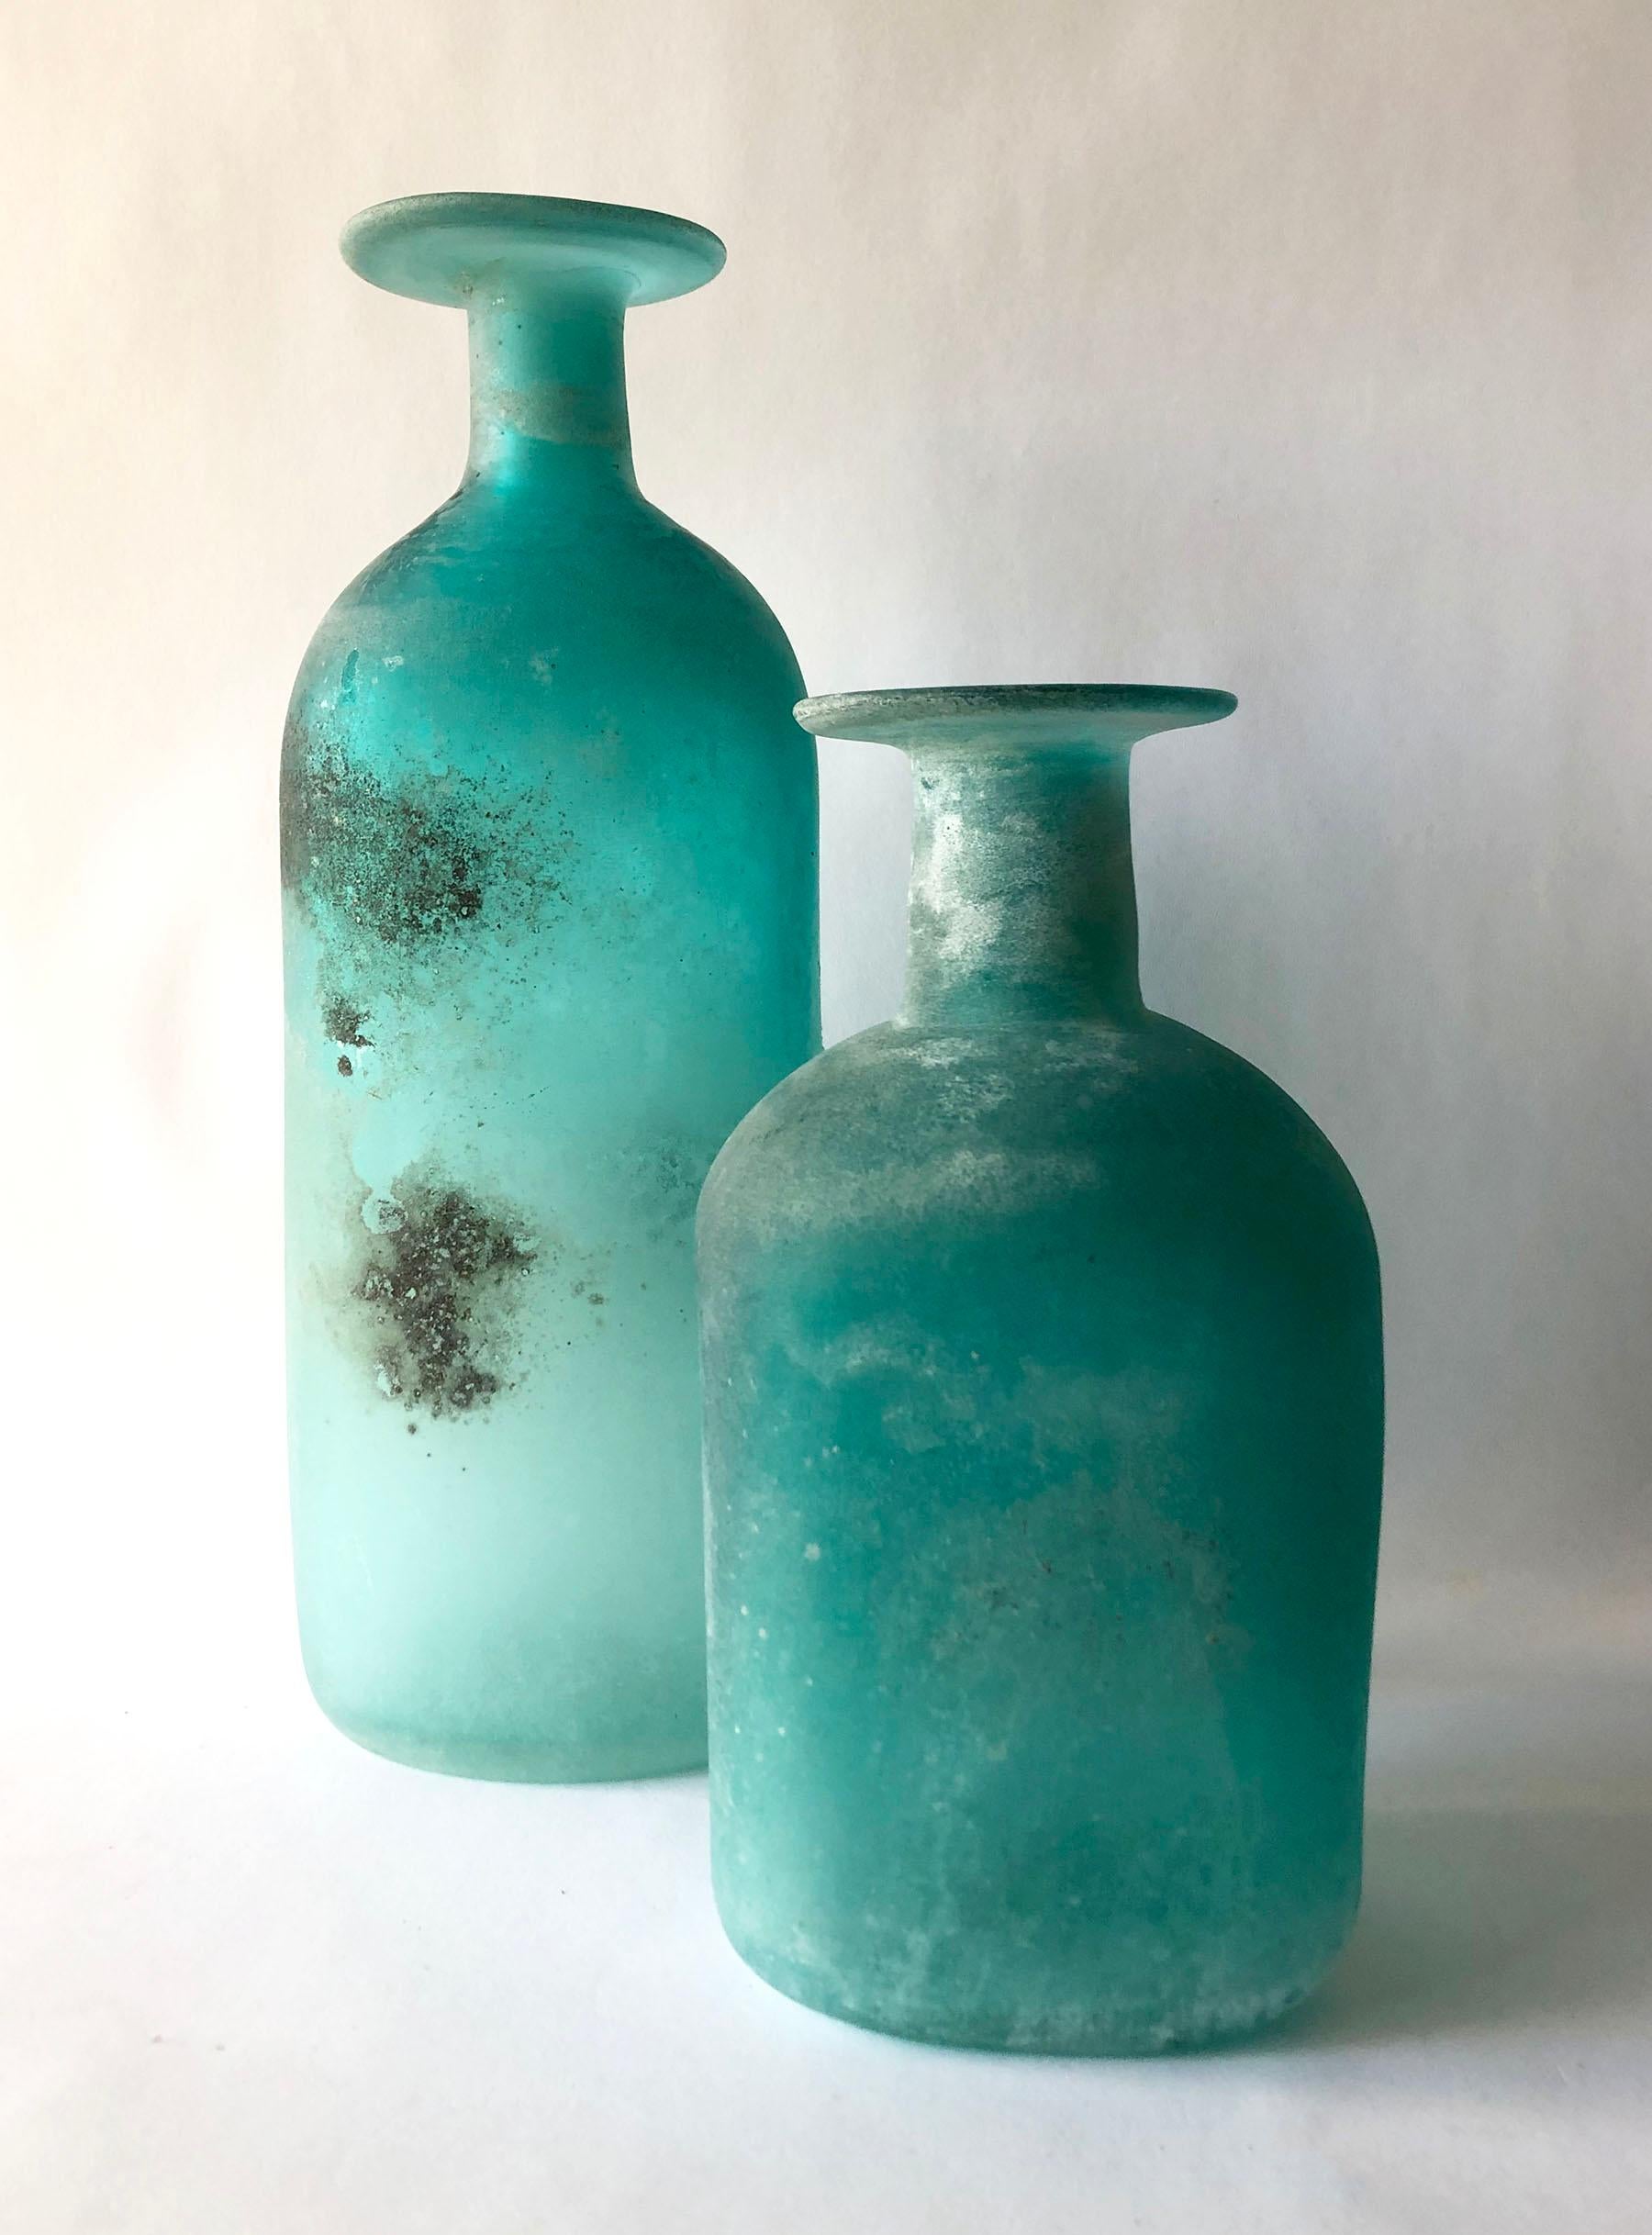 Pair of aqua bottle vases made in the 